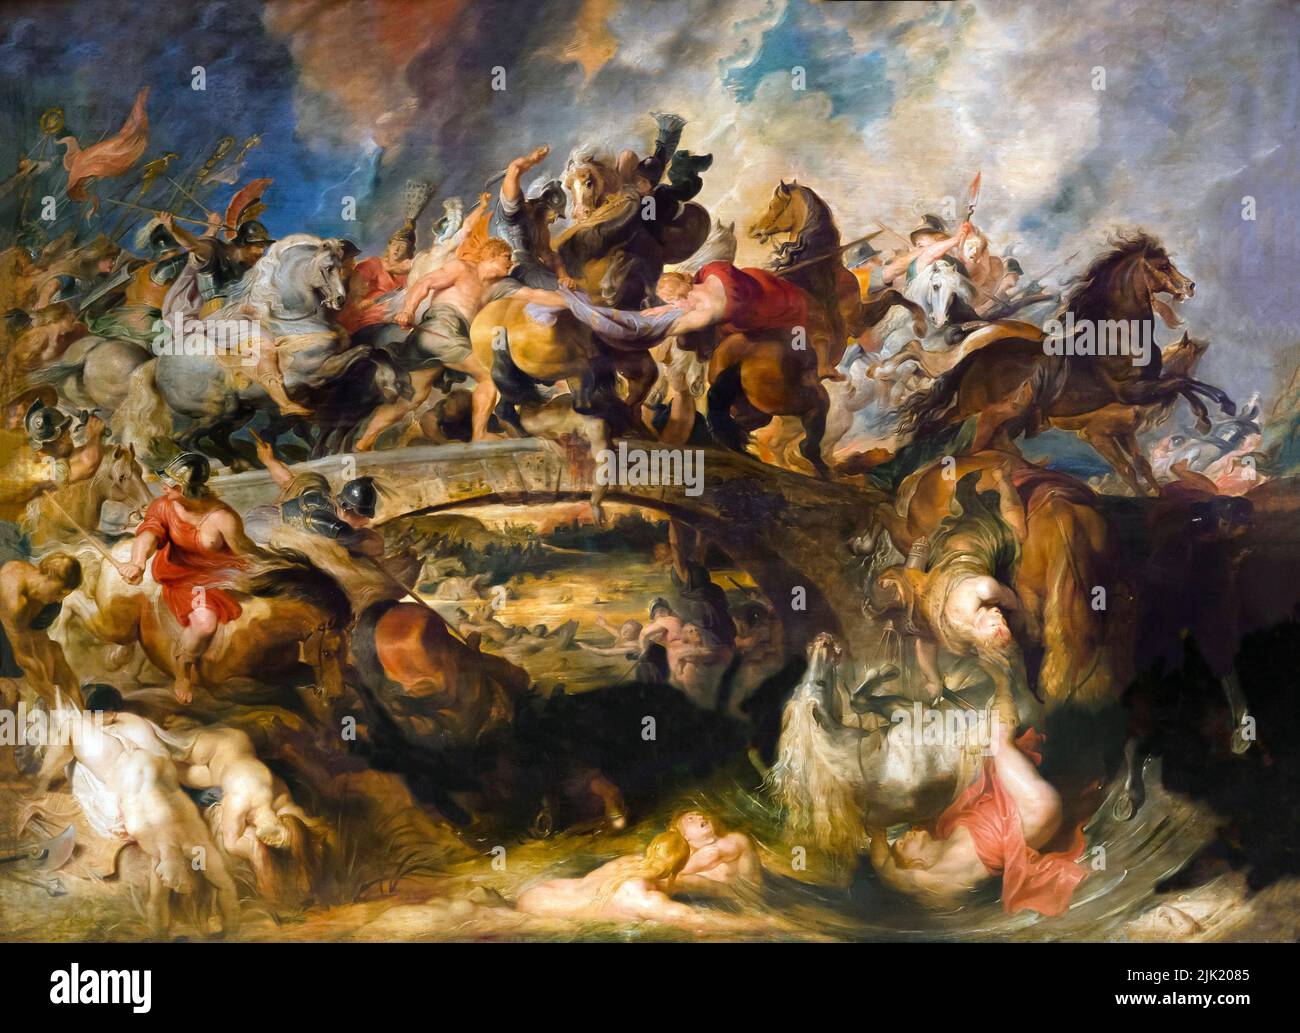 La Batalla de las Amazonas, Peter Paul Rubens, 1618, Alte Pinakothek, Múnich, Alemania Foto de stock